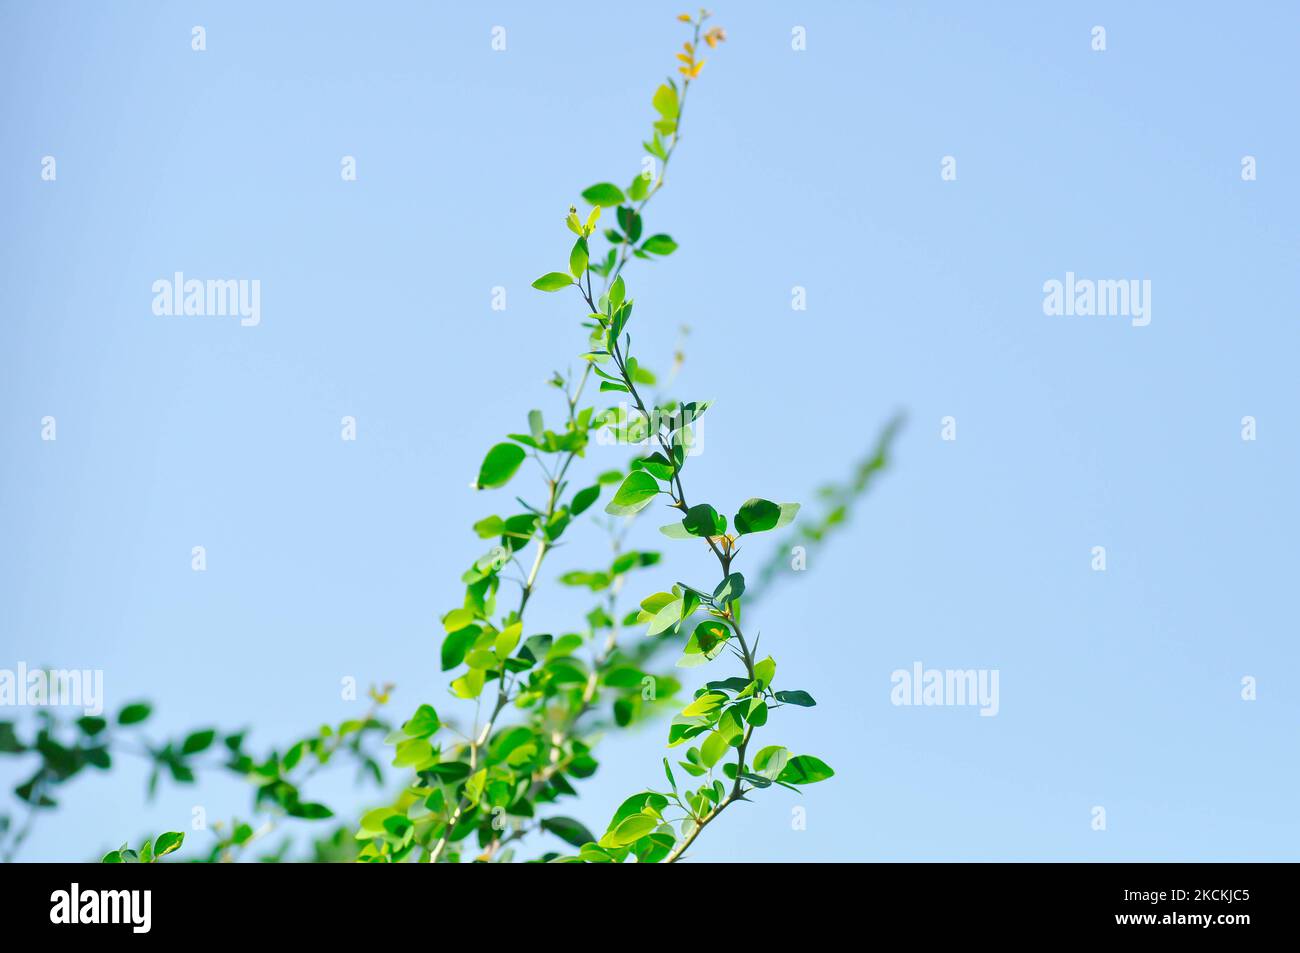 Pithecellobium dulce Roxb Benth,Madras thorn, Manila tamarind, FABACEAE plant and sky background Stock Photo